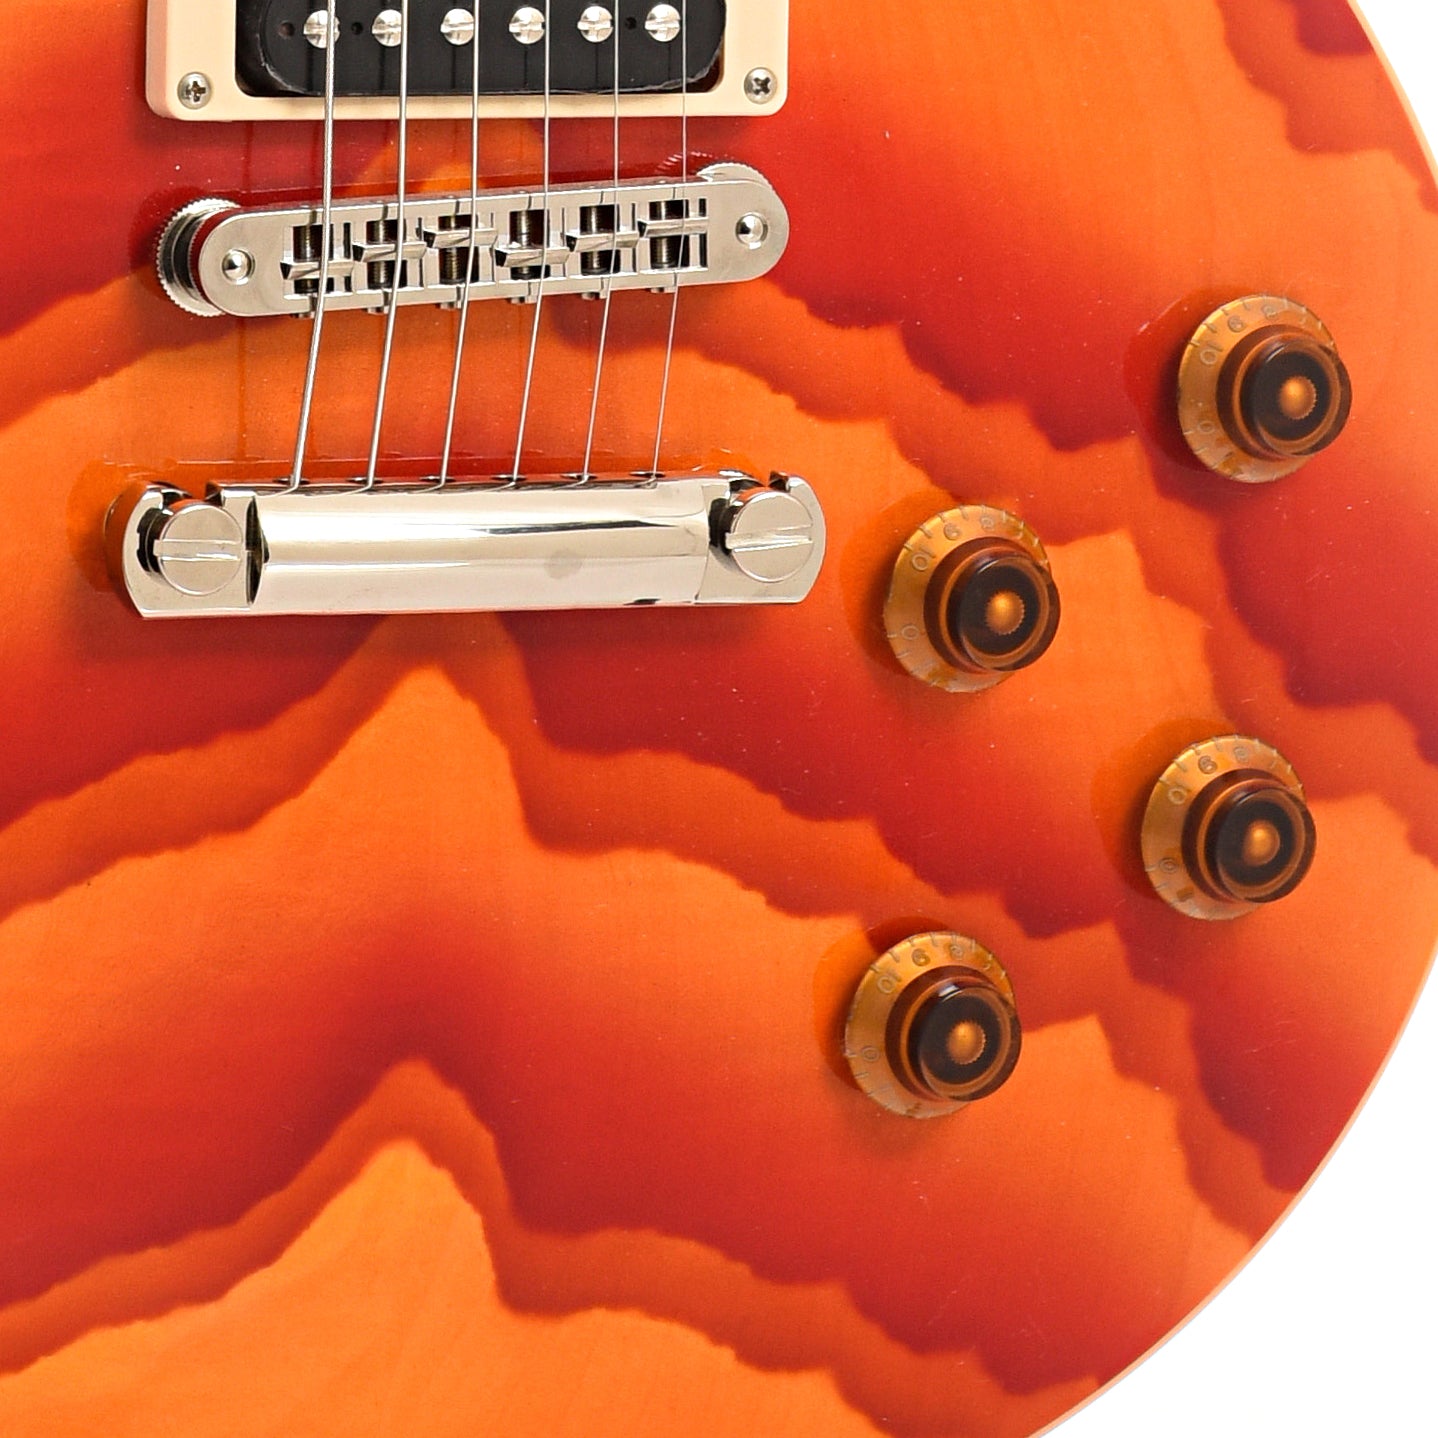 Bridge, tailpiece ancontrols of Gibson Les Paul Classic Tom Morgan Special Electric Guitar